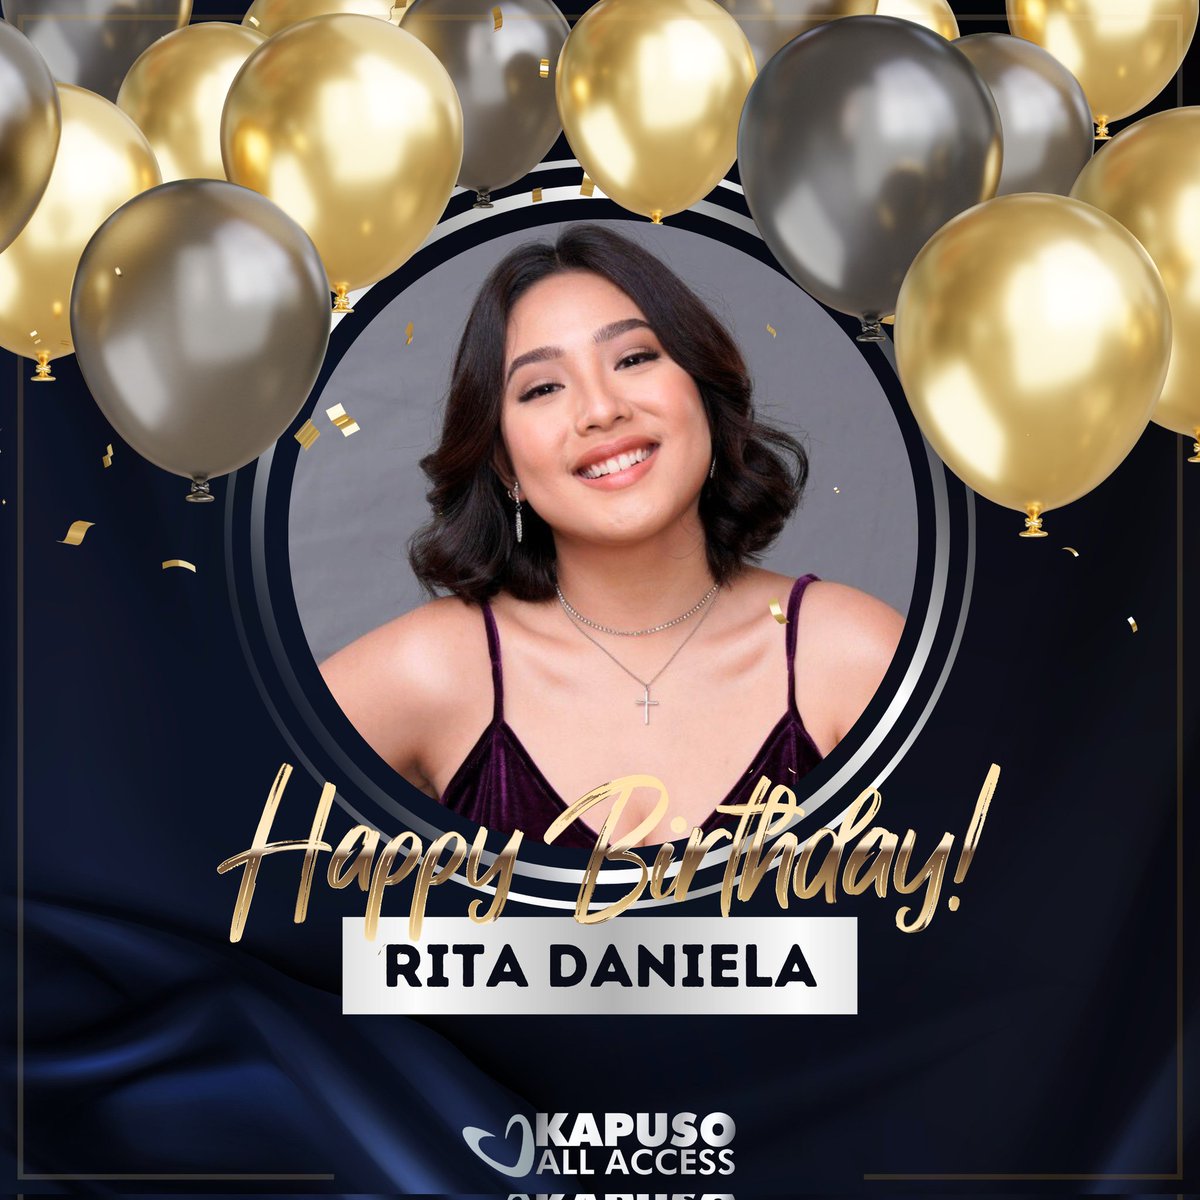 Happy birthday, Rita Daniela! Wishing you good health, happiness, and more success. 💖 #HBDKapusoRita #RitaDaniela #Kapuso